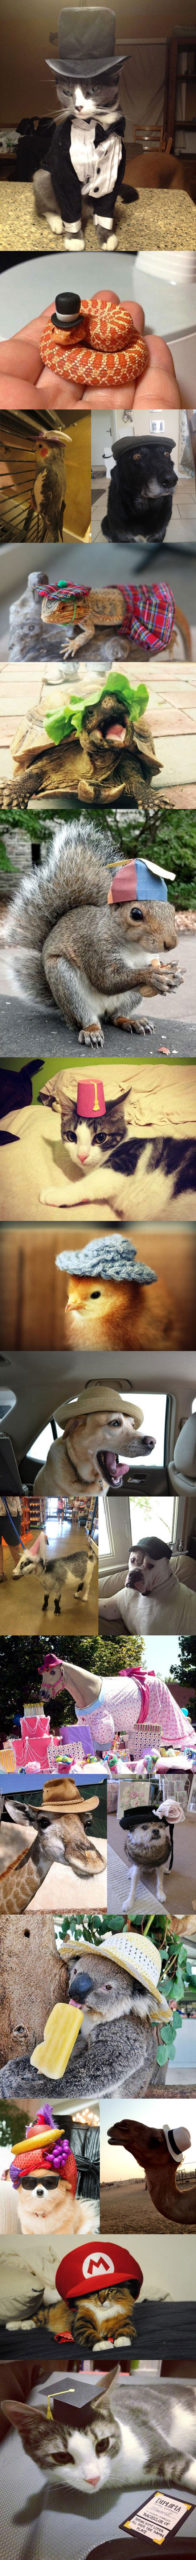 Animals+Wearing+Hats